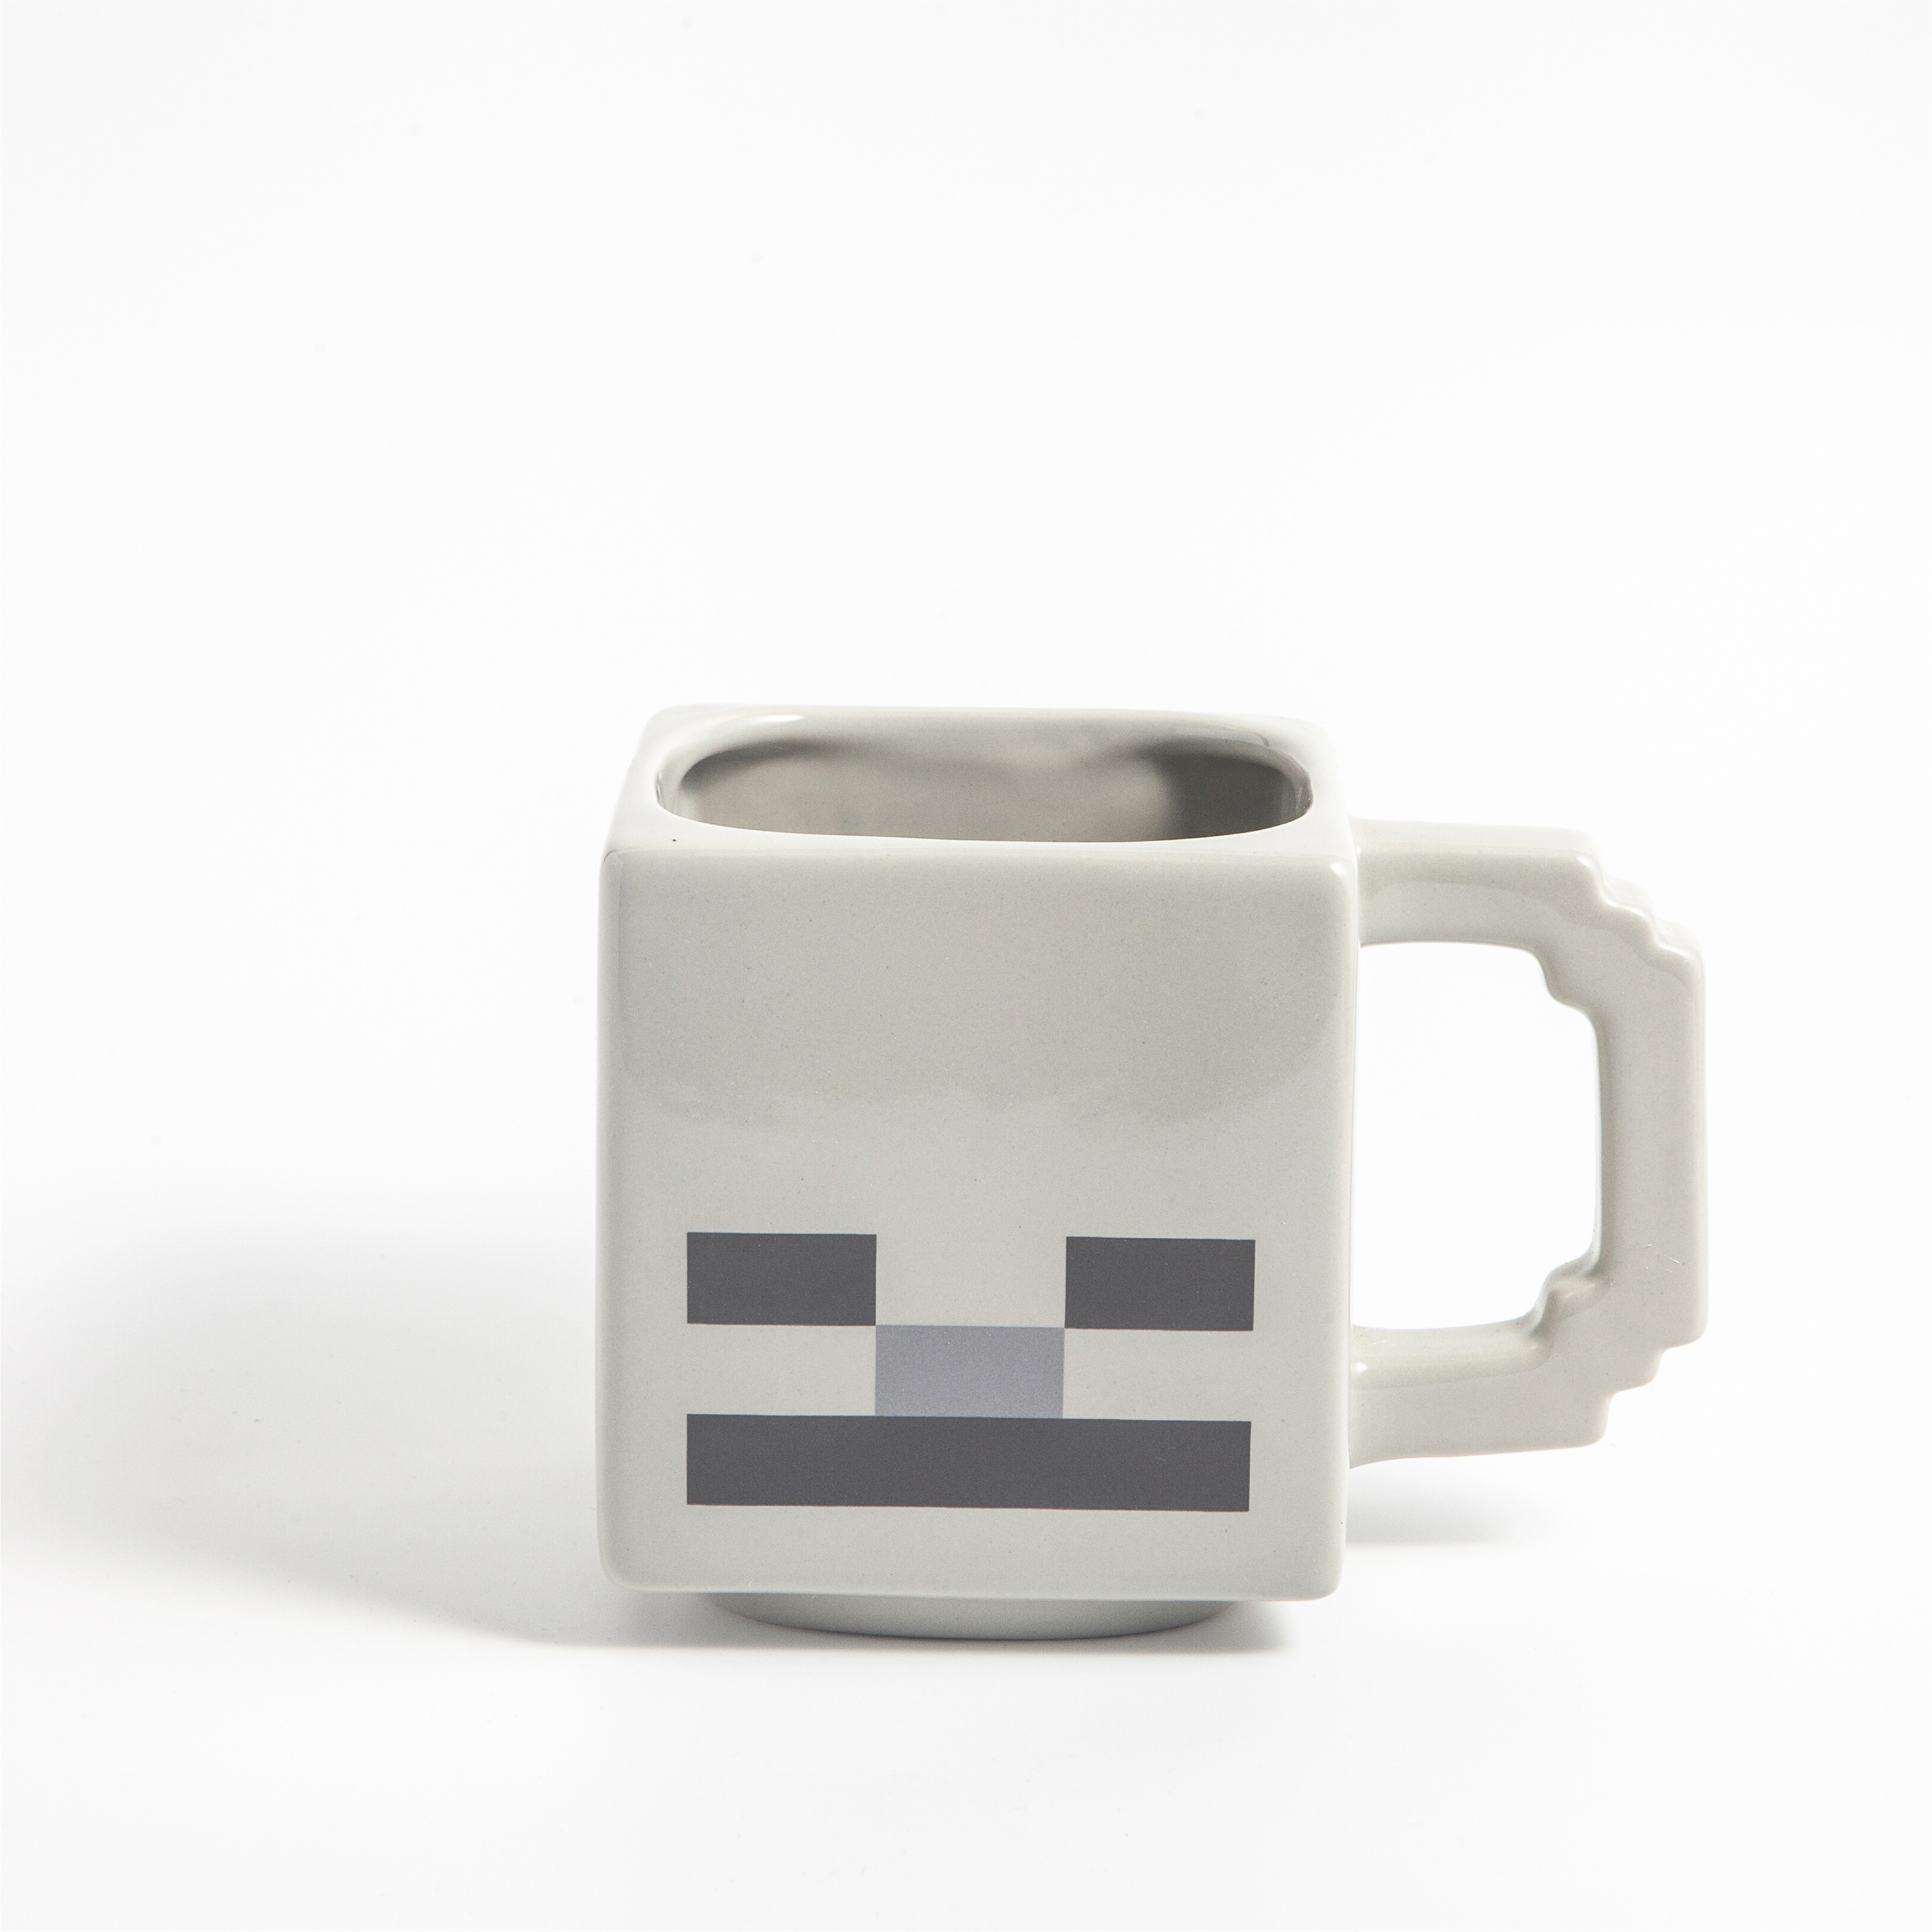 Minecraft Ceramic Coffee Mug, TNT, Skeletons and Creeper, 3-piece set slideshow image 3